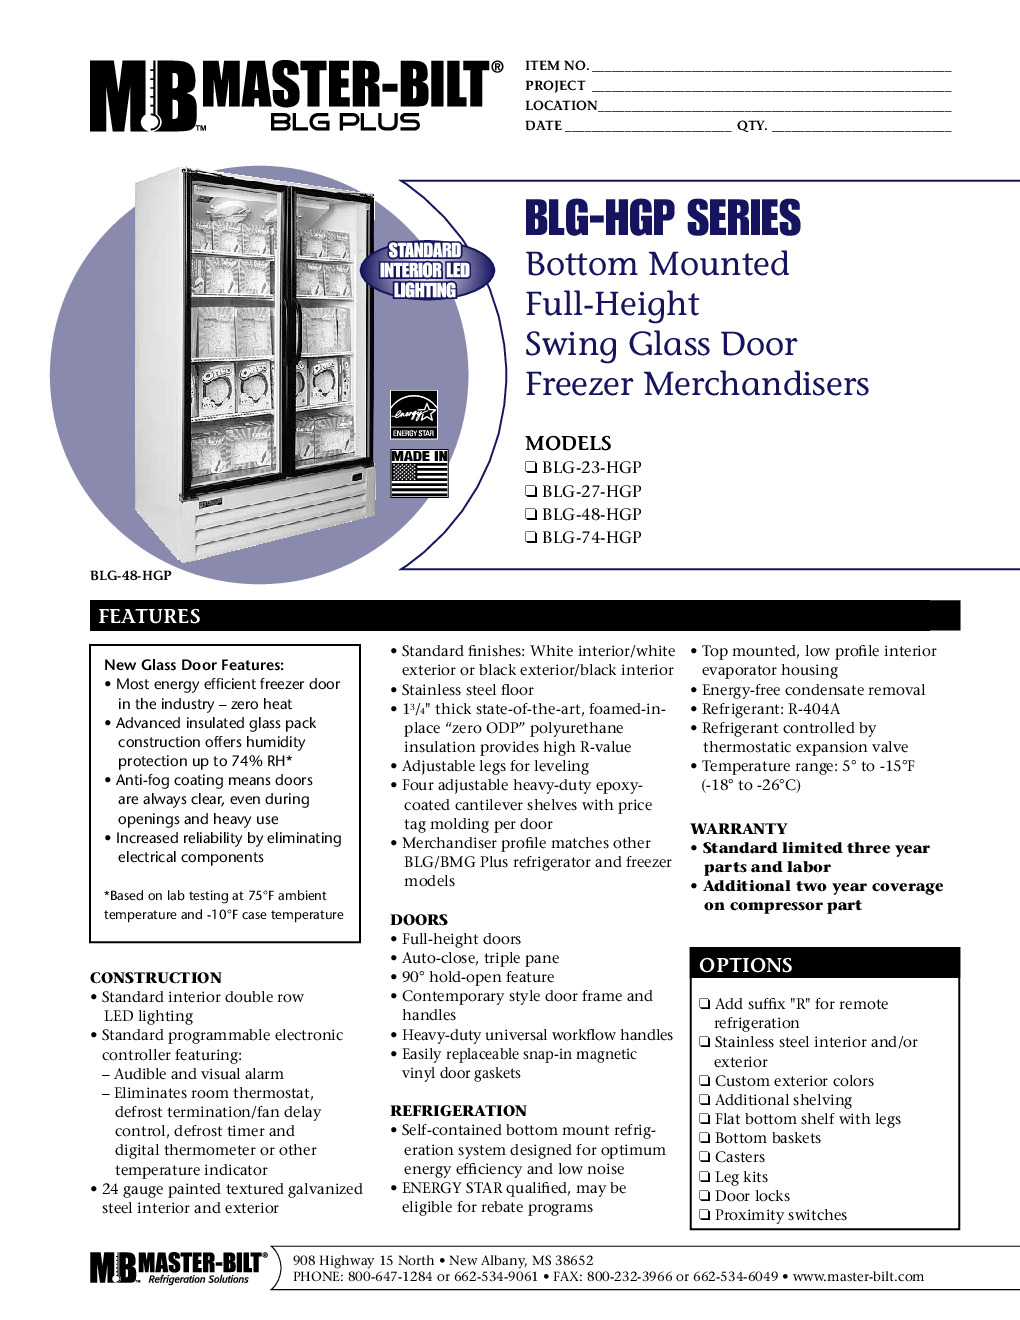 Master-Bilt BLG-48-HGP Merchandiser Freezer